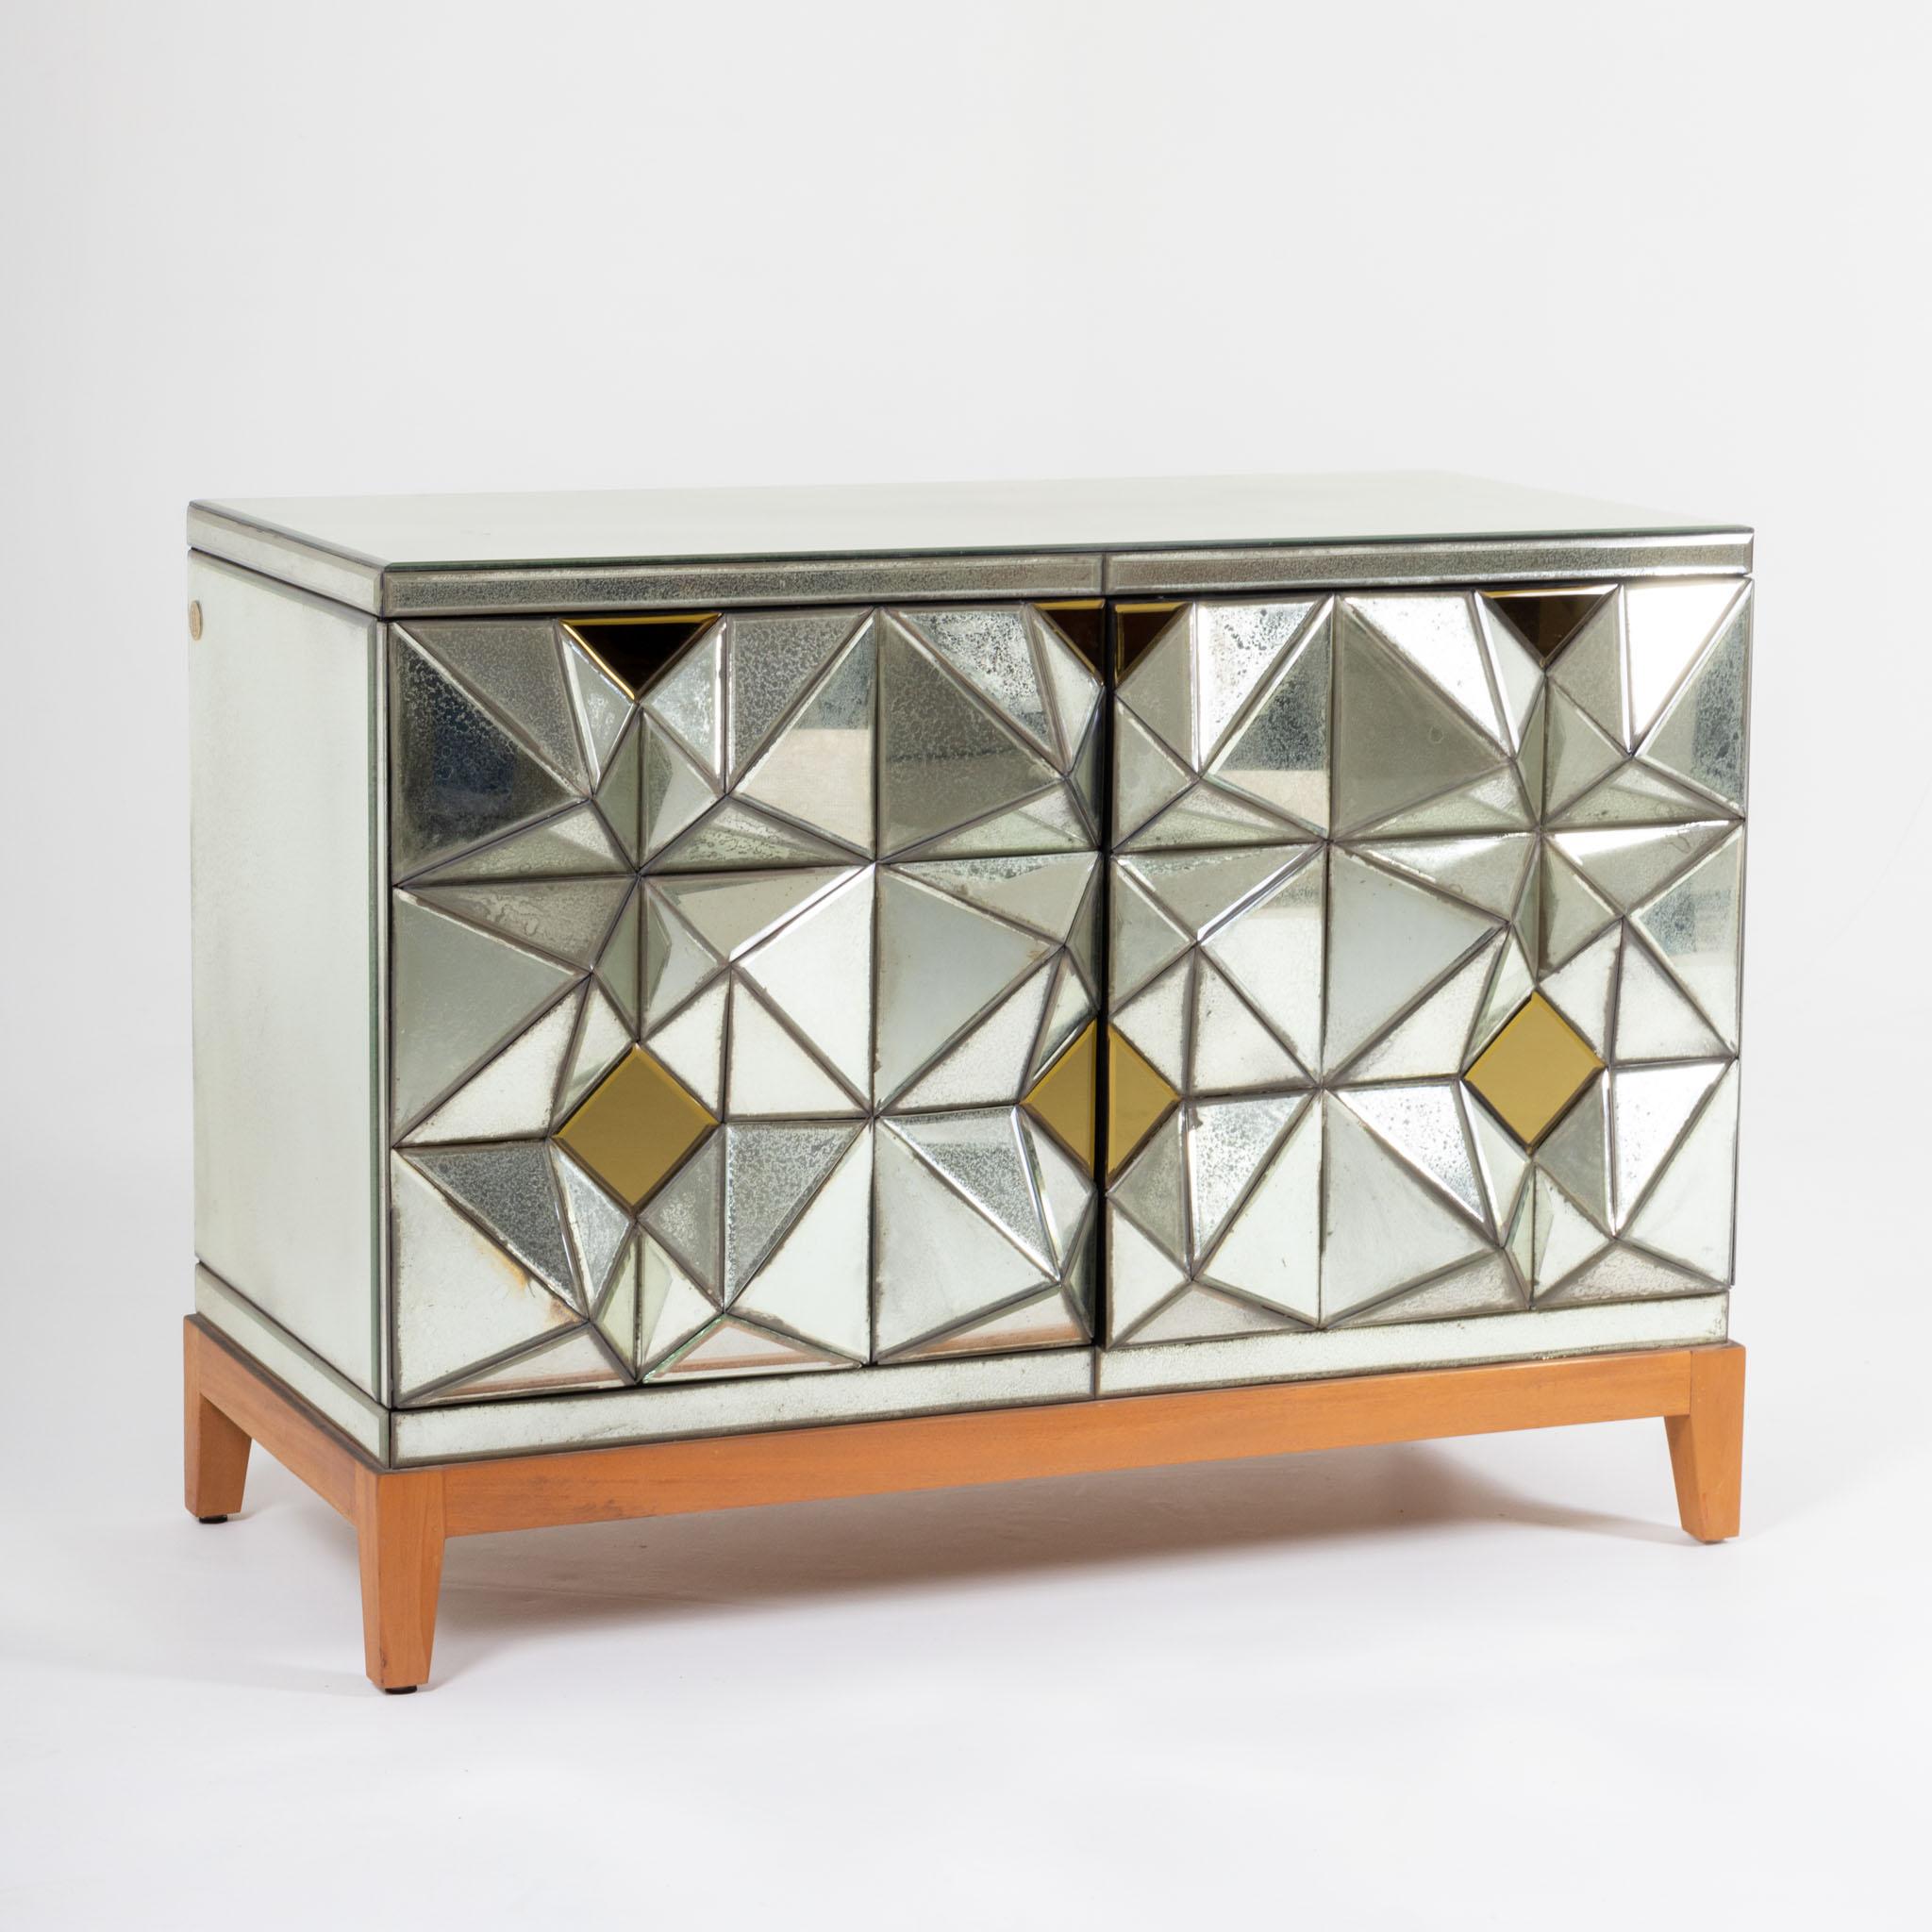 Belgian Olivier De Schrijver '*1958', Buffet Diamond Star Gold, No. 6/8, Ode's Design